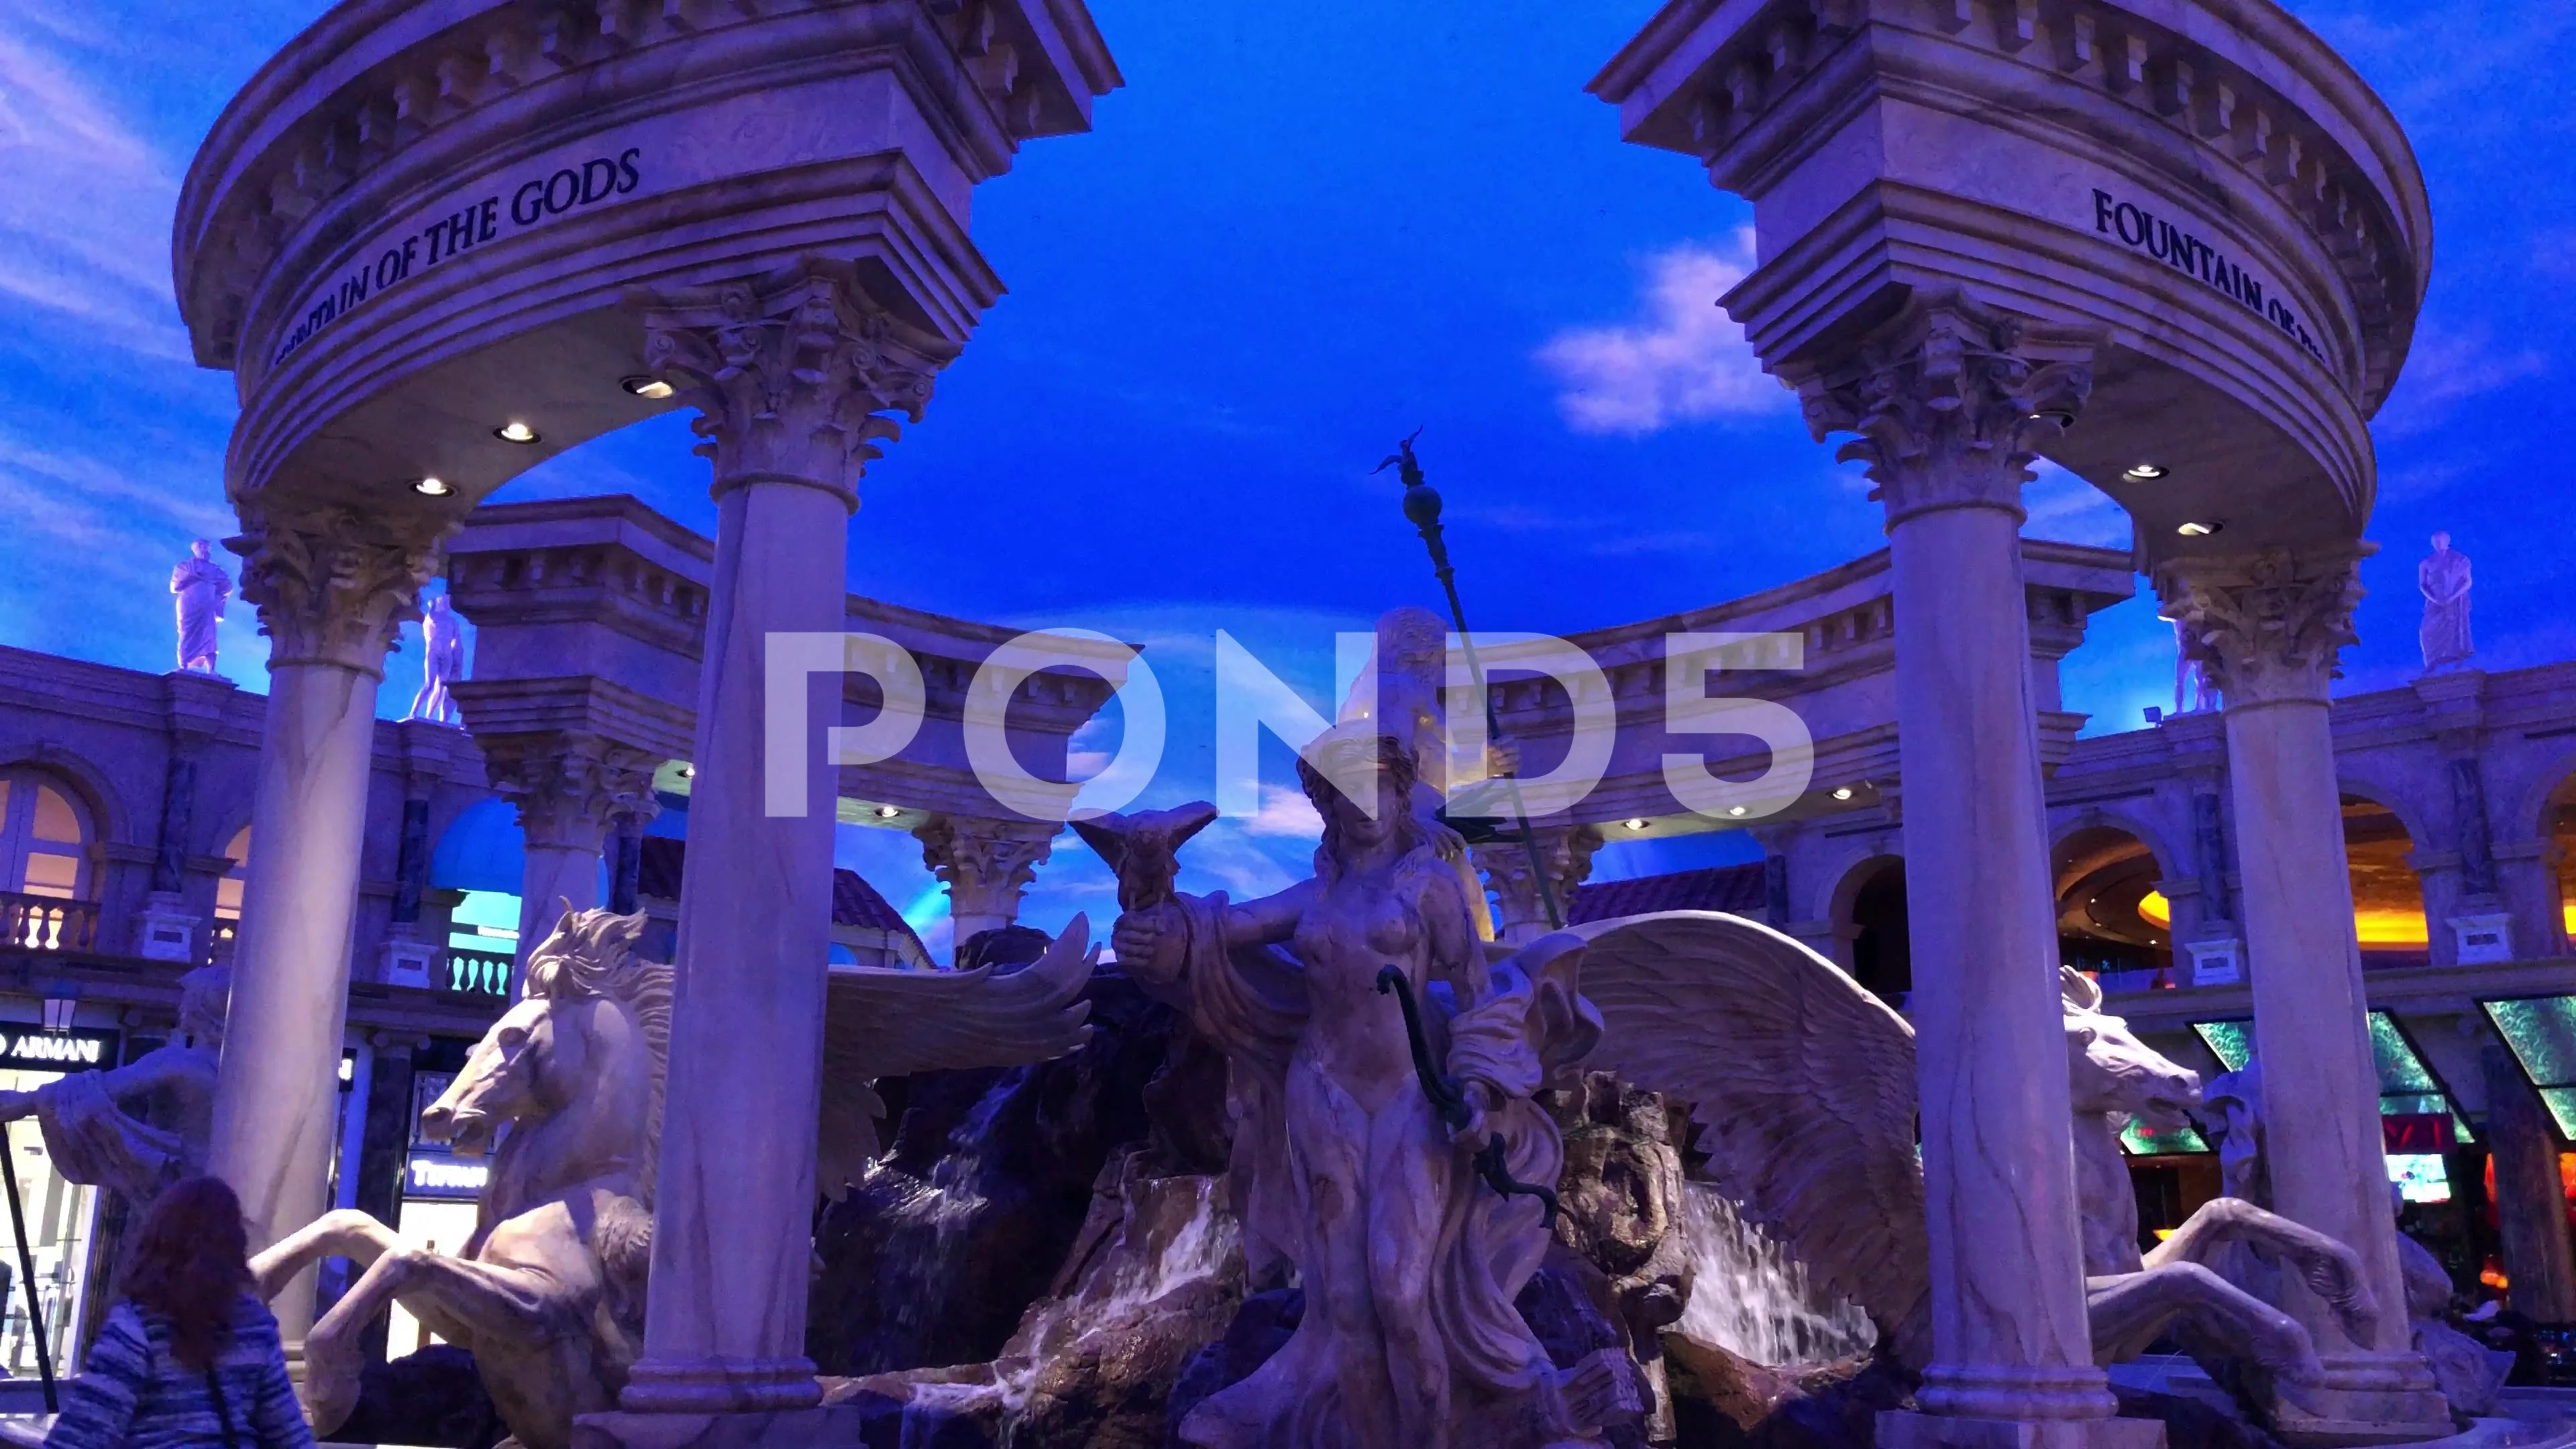 Fountain Of God Inside The Forum Shops @ Caesars Palace Las Vegas